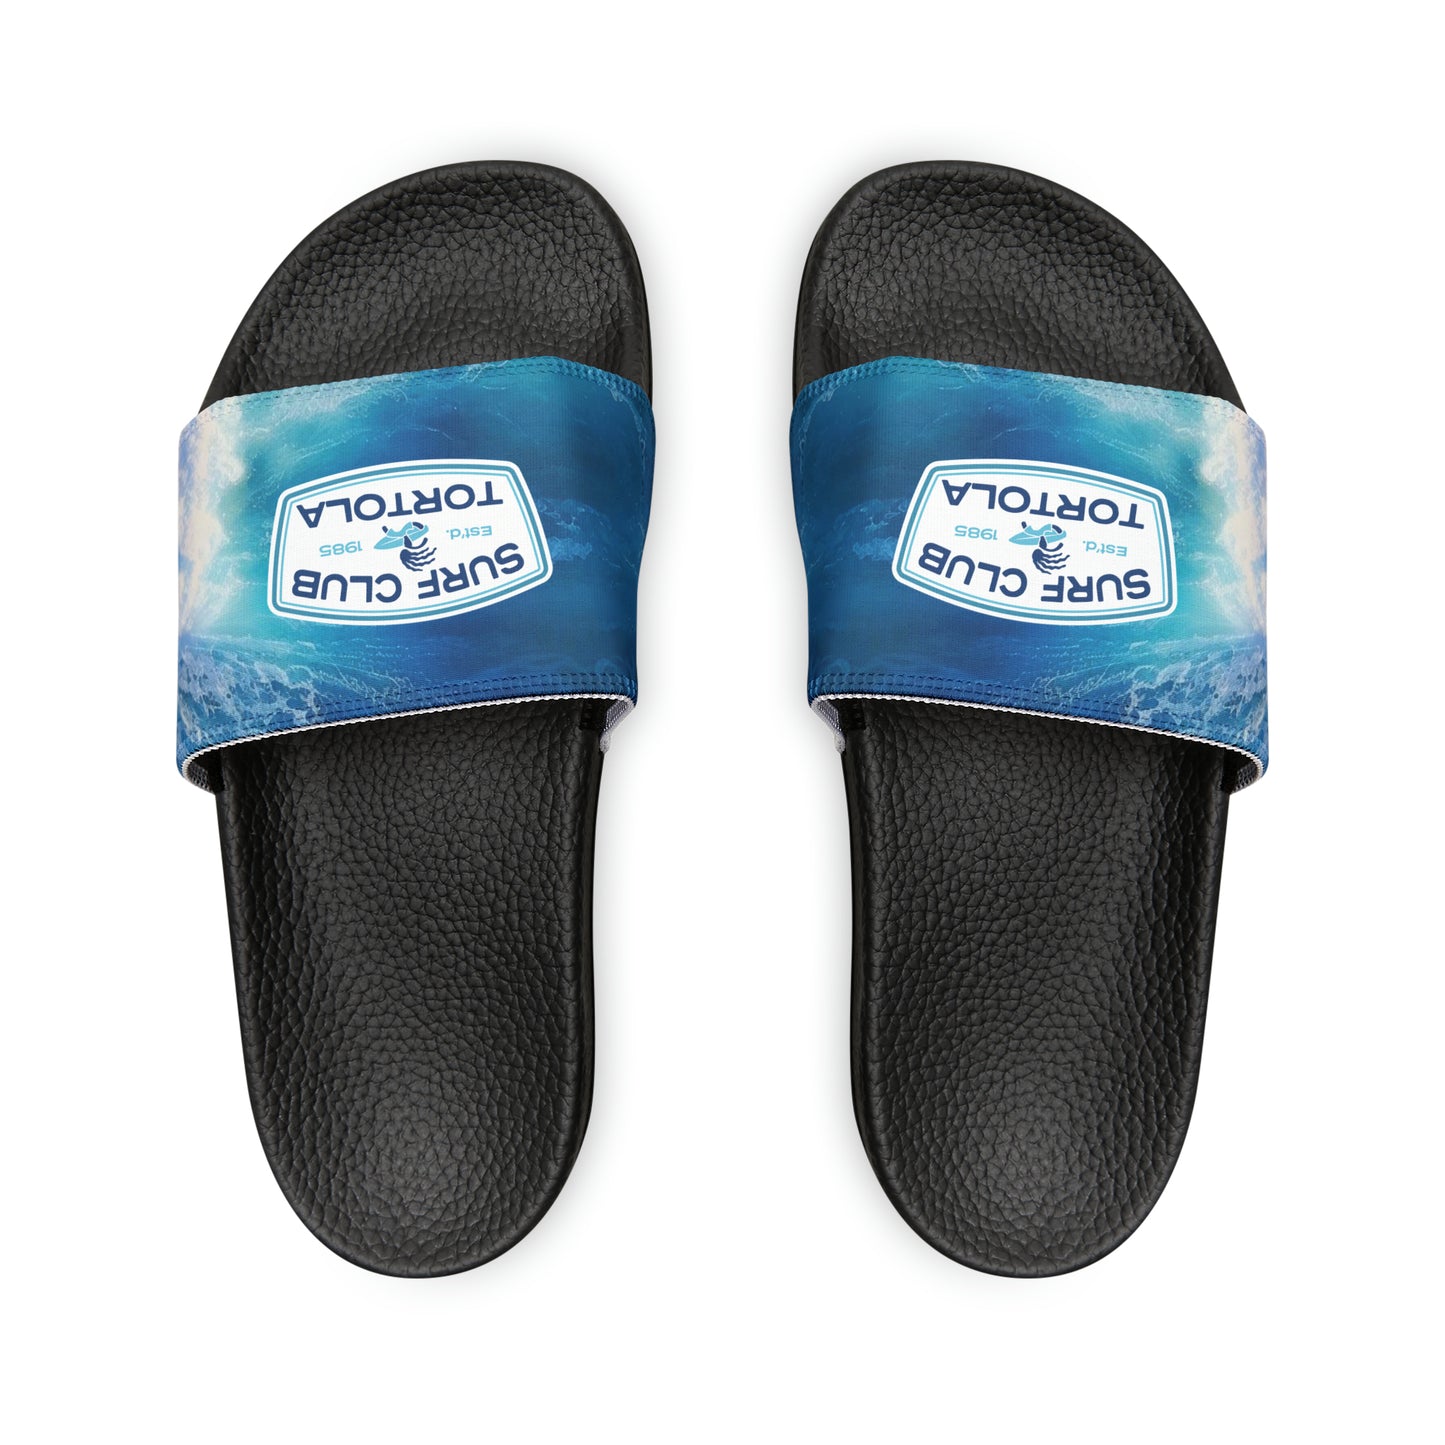 "Surf Club Tortola" Men's Slide Sandals